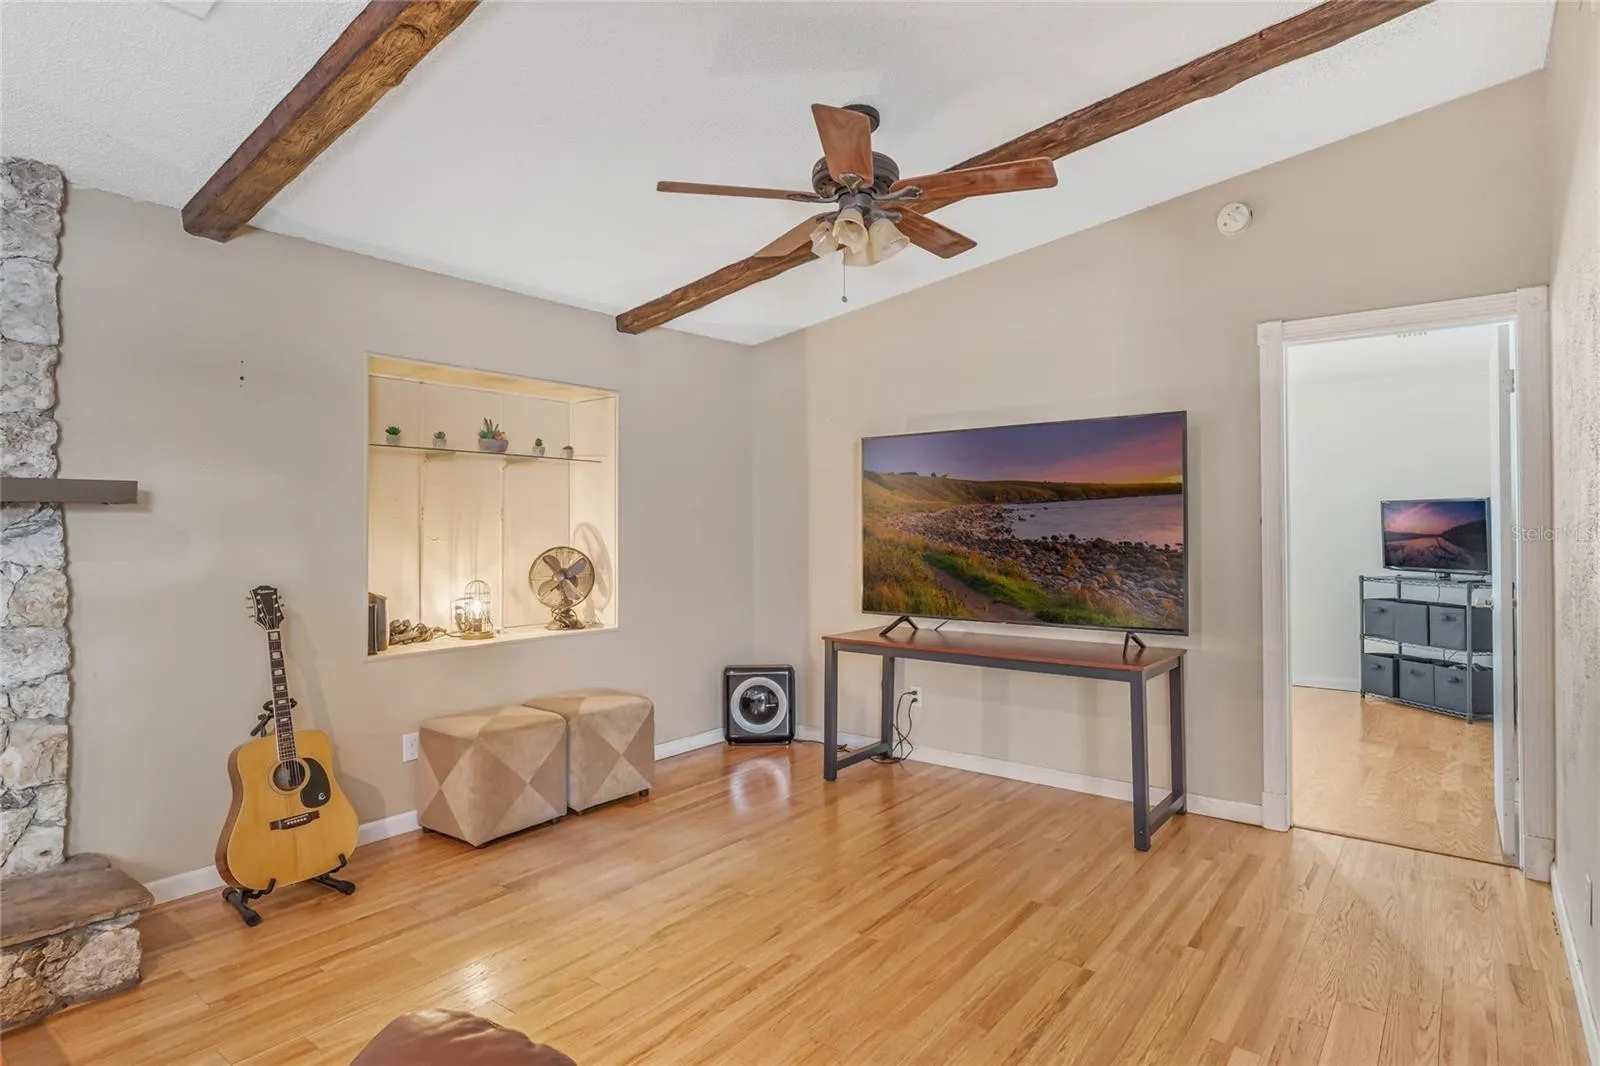 living room view with vinyl floors